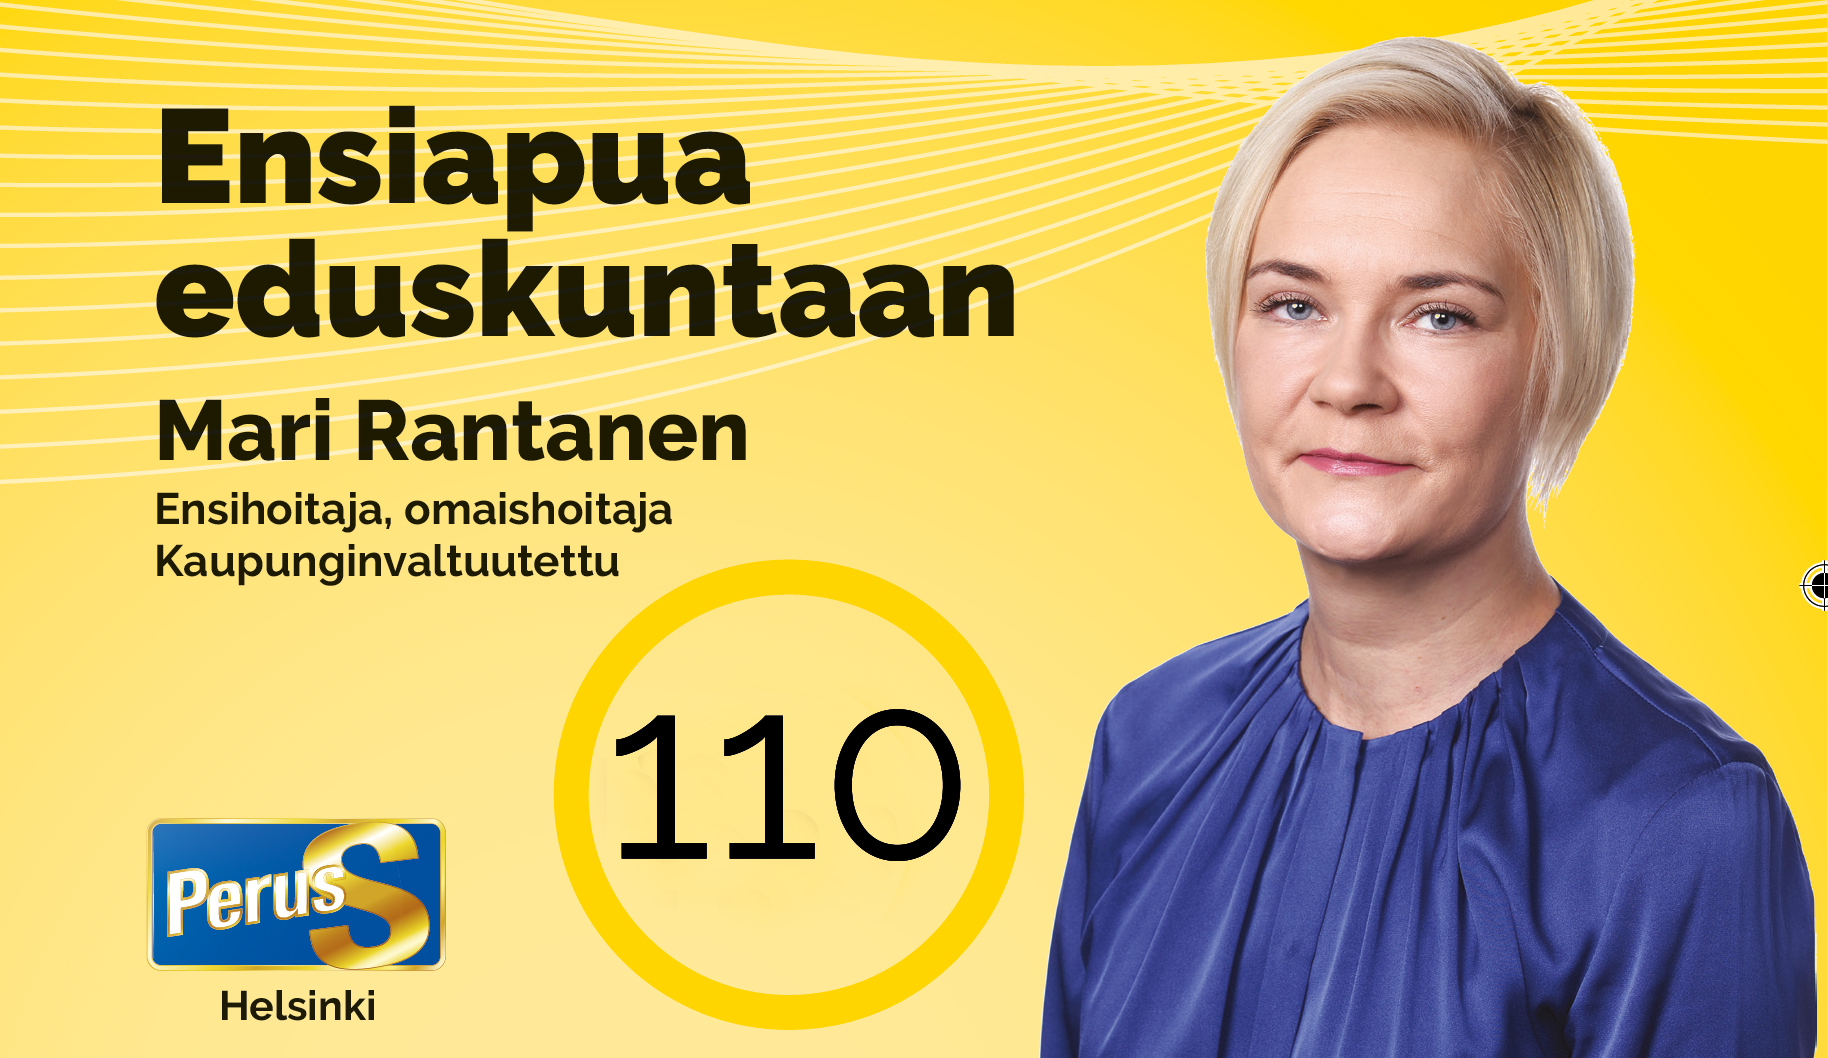 www.marirantanen.fi